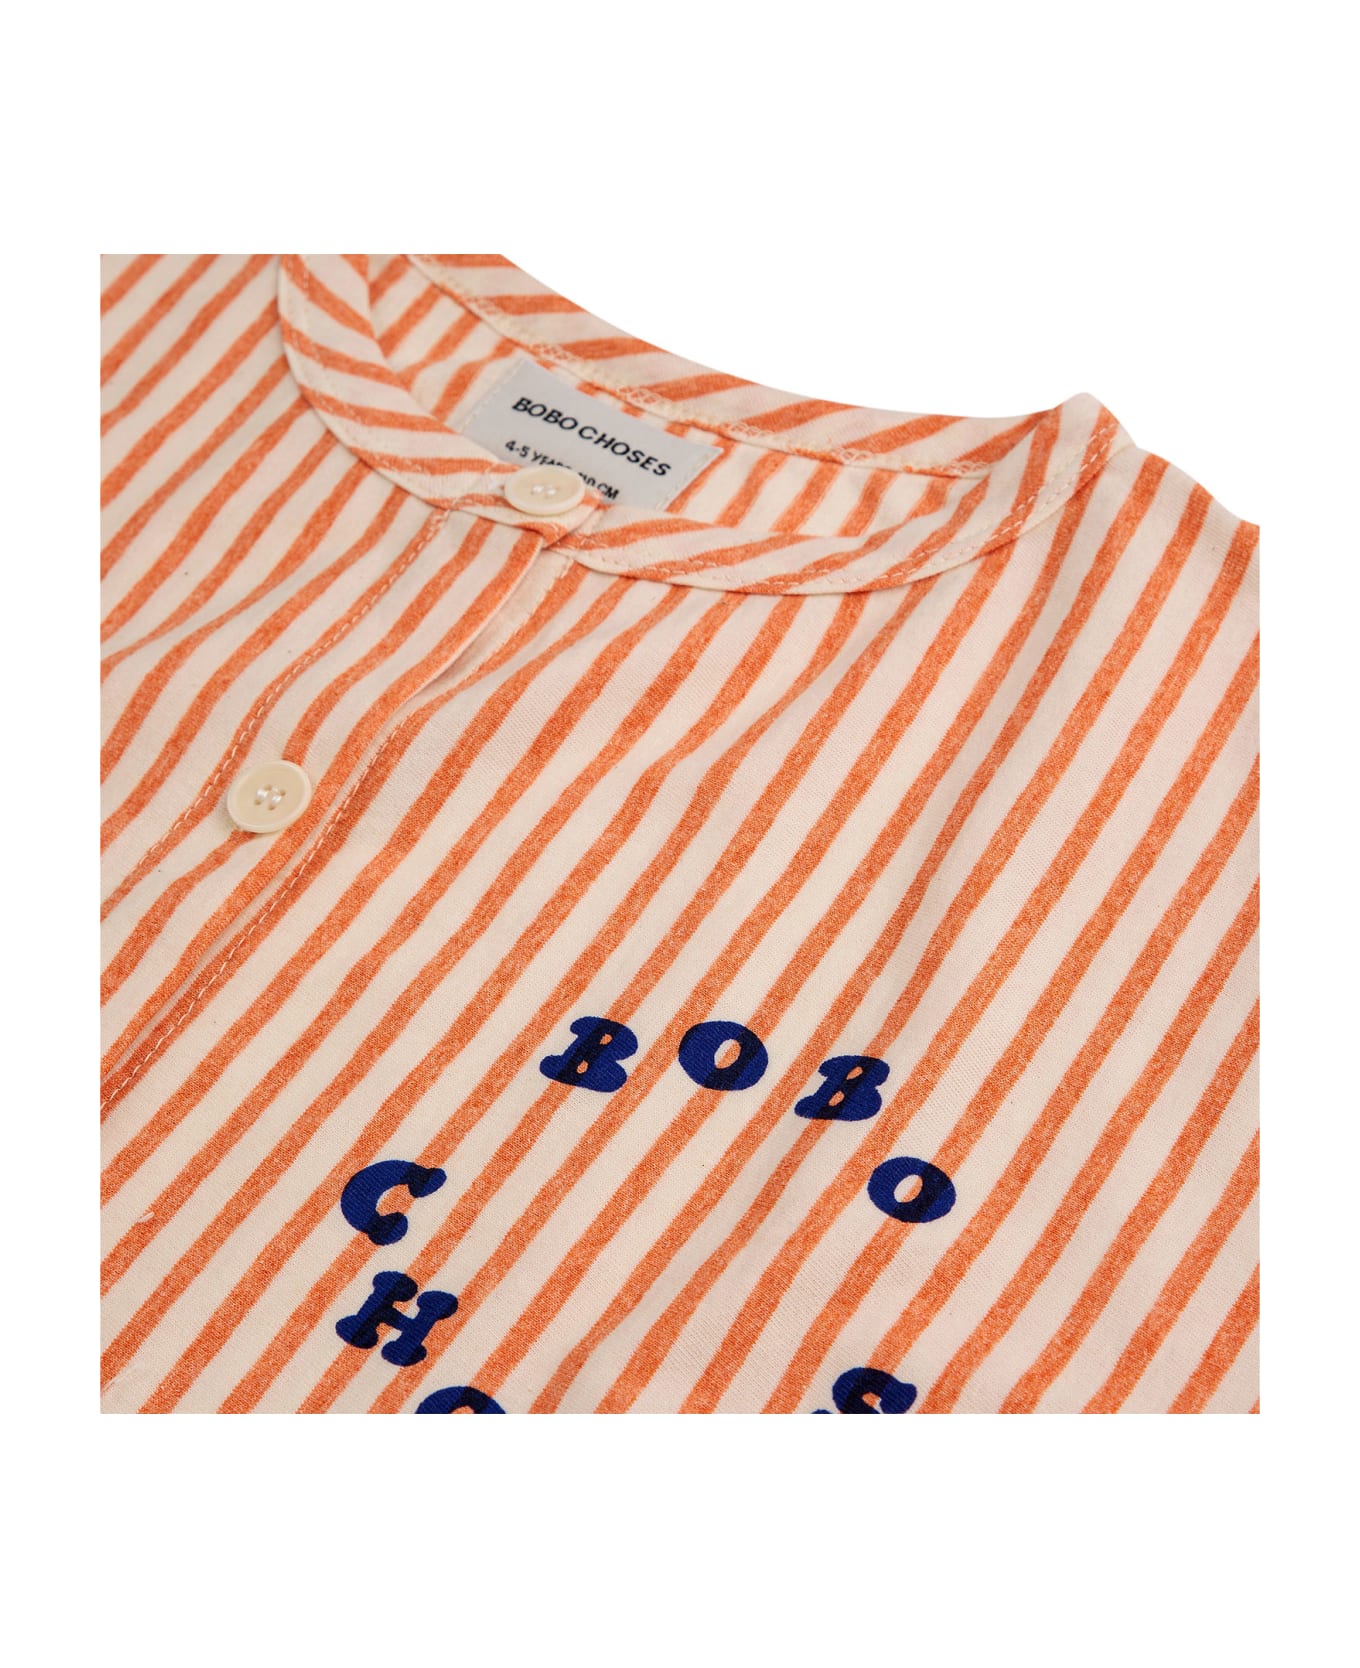 Bobo Choses Orange Jumpsuit For Girl With Stripes And Logo - Orange